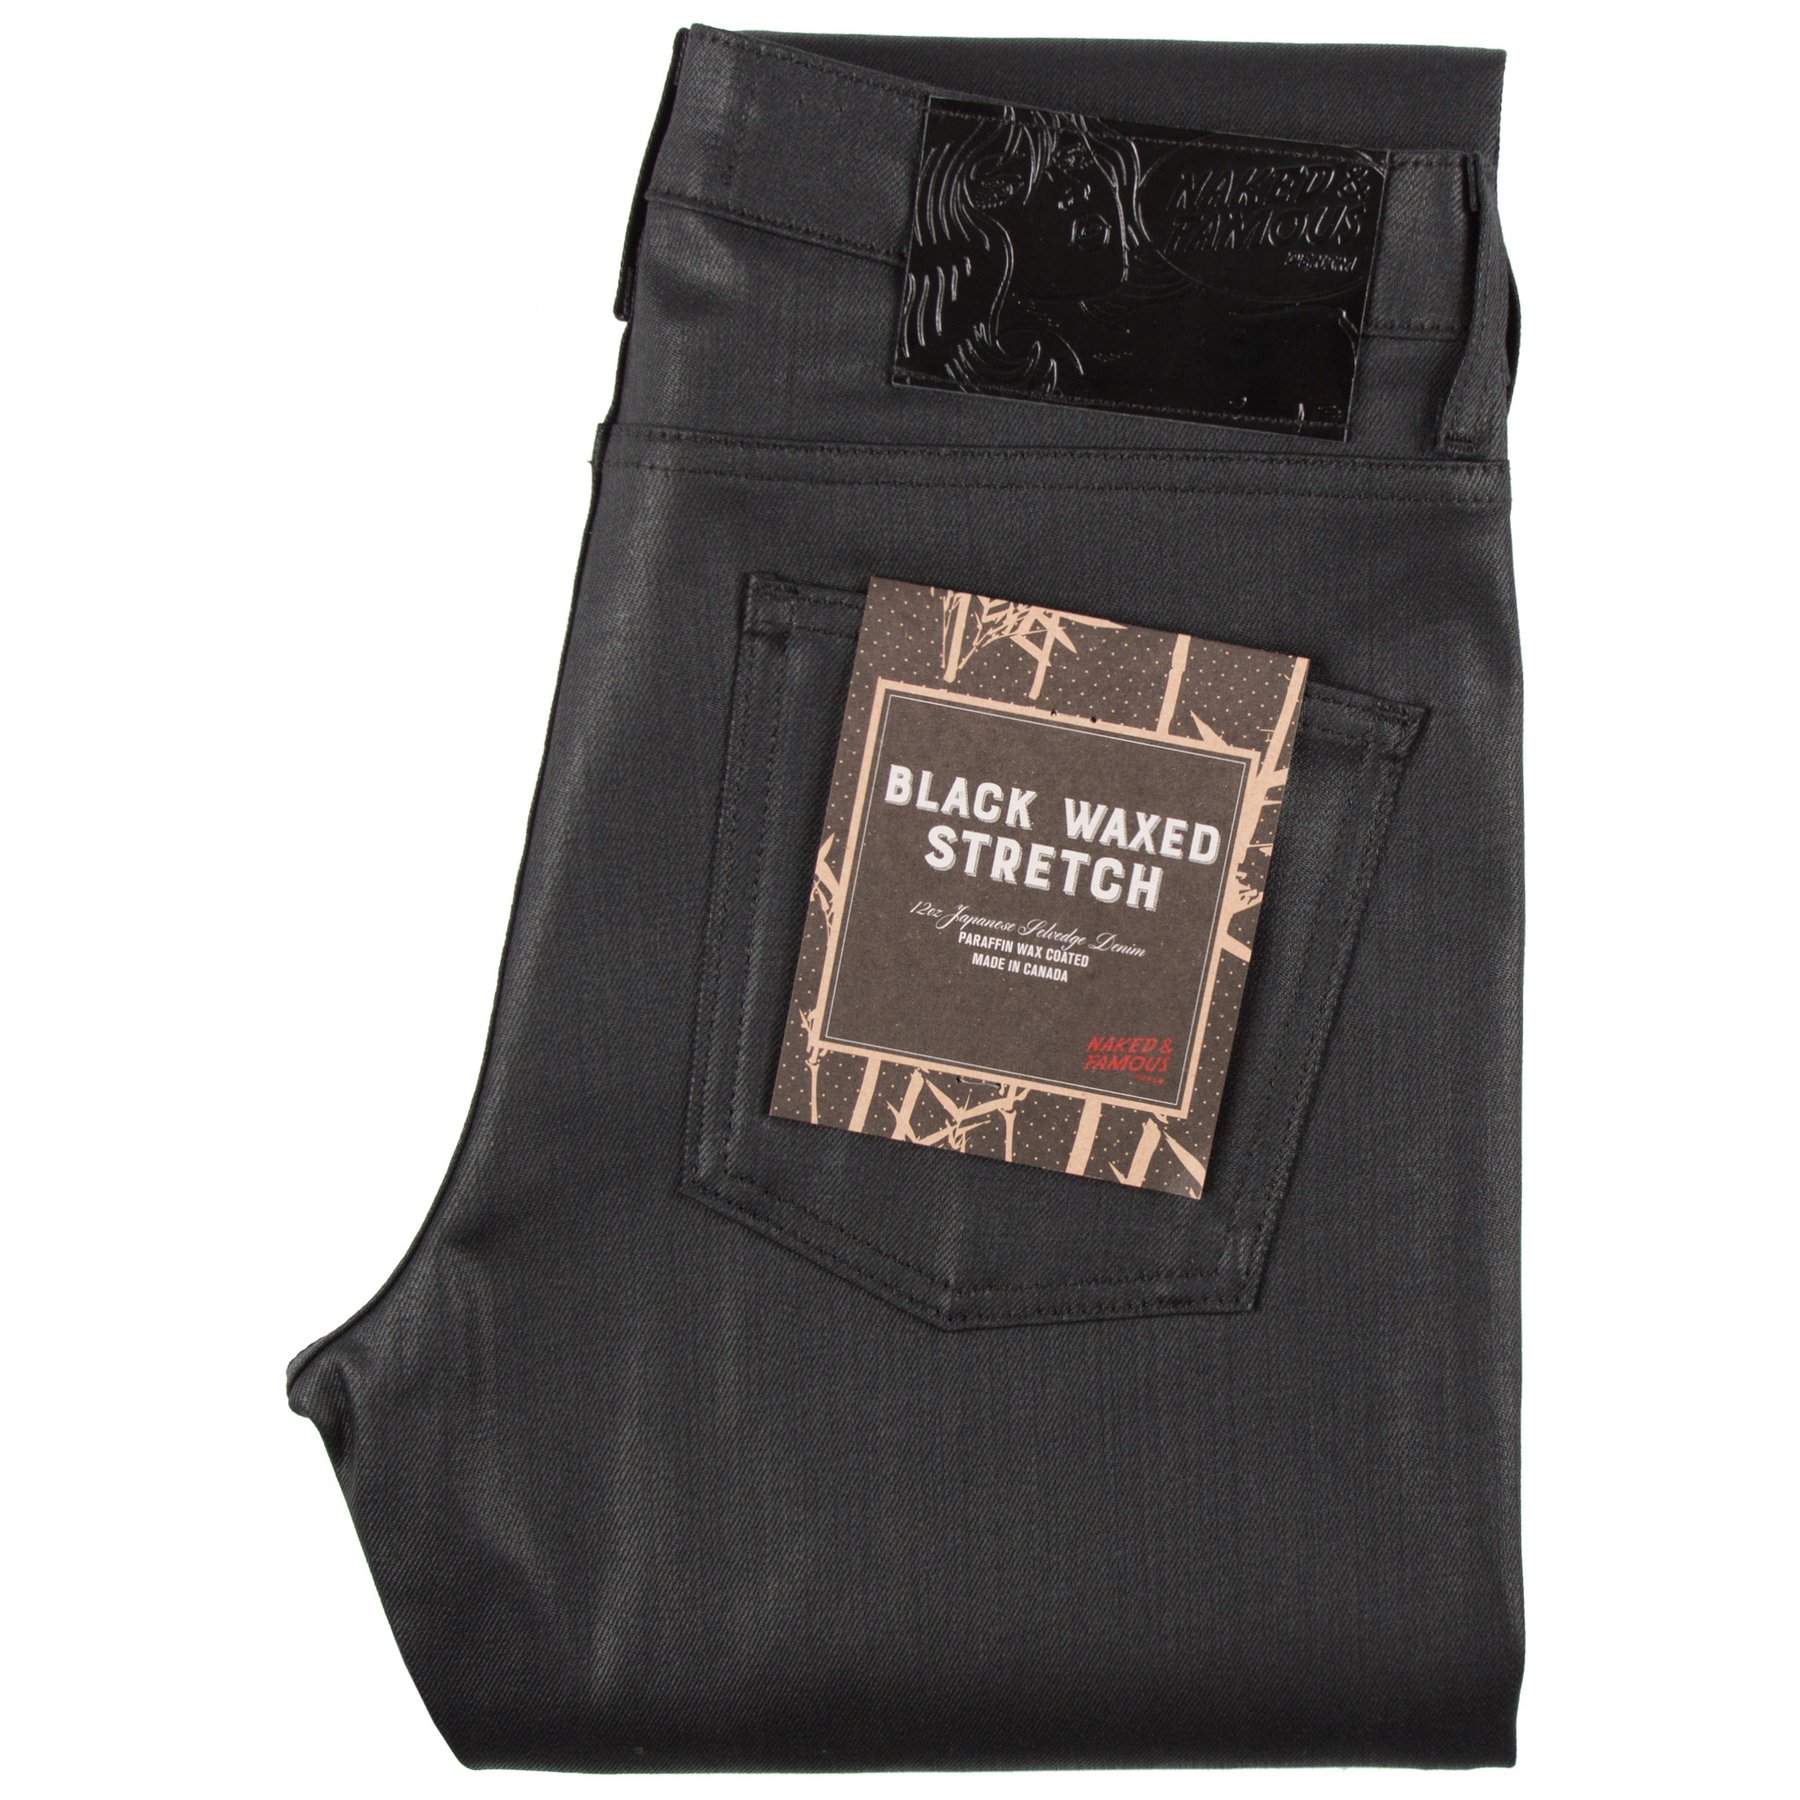  Black Waxed Stretch Jeans Folded 